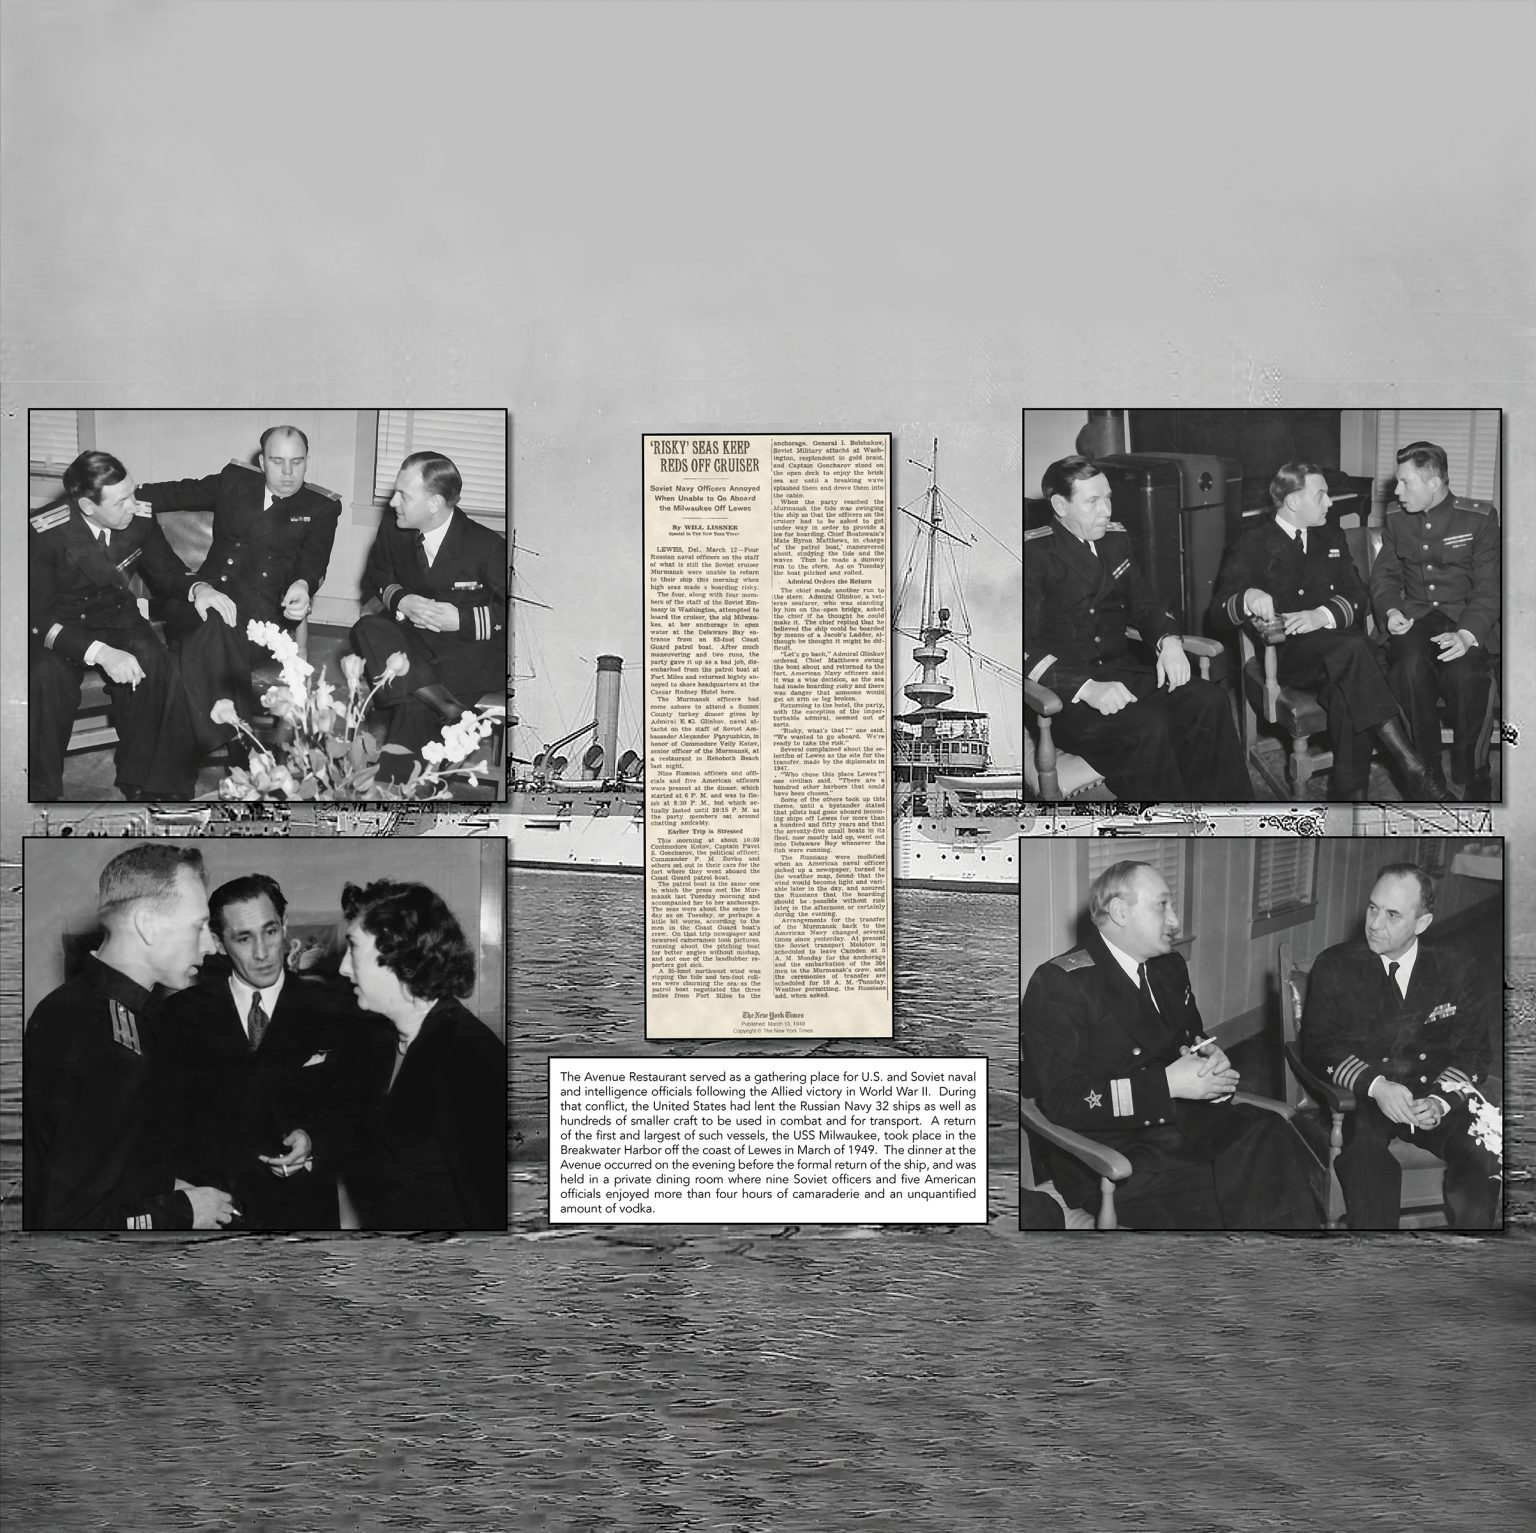 1949 naval summit at Avenue